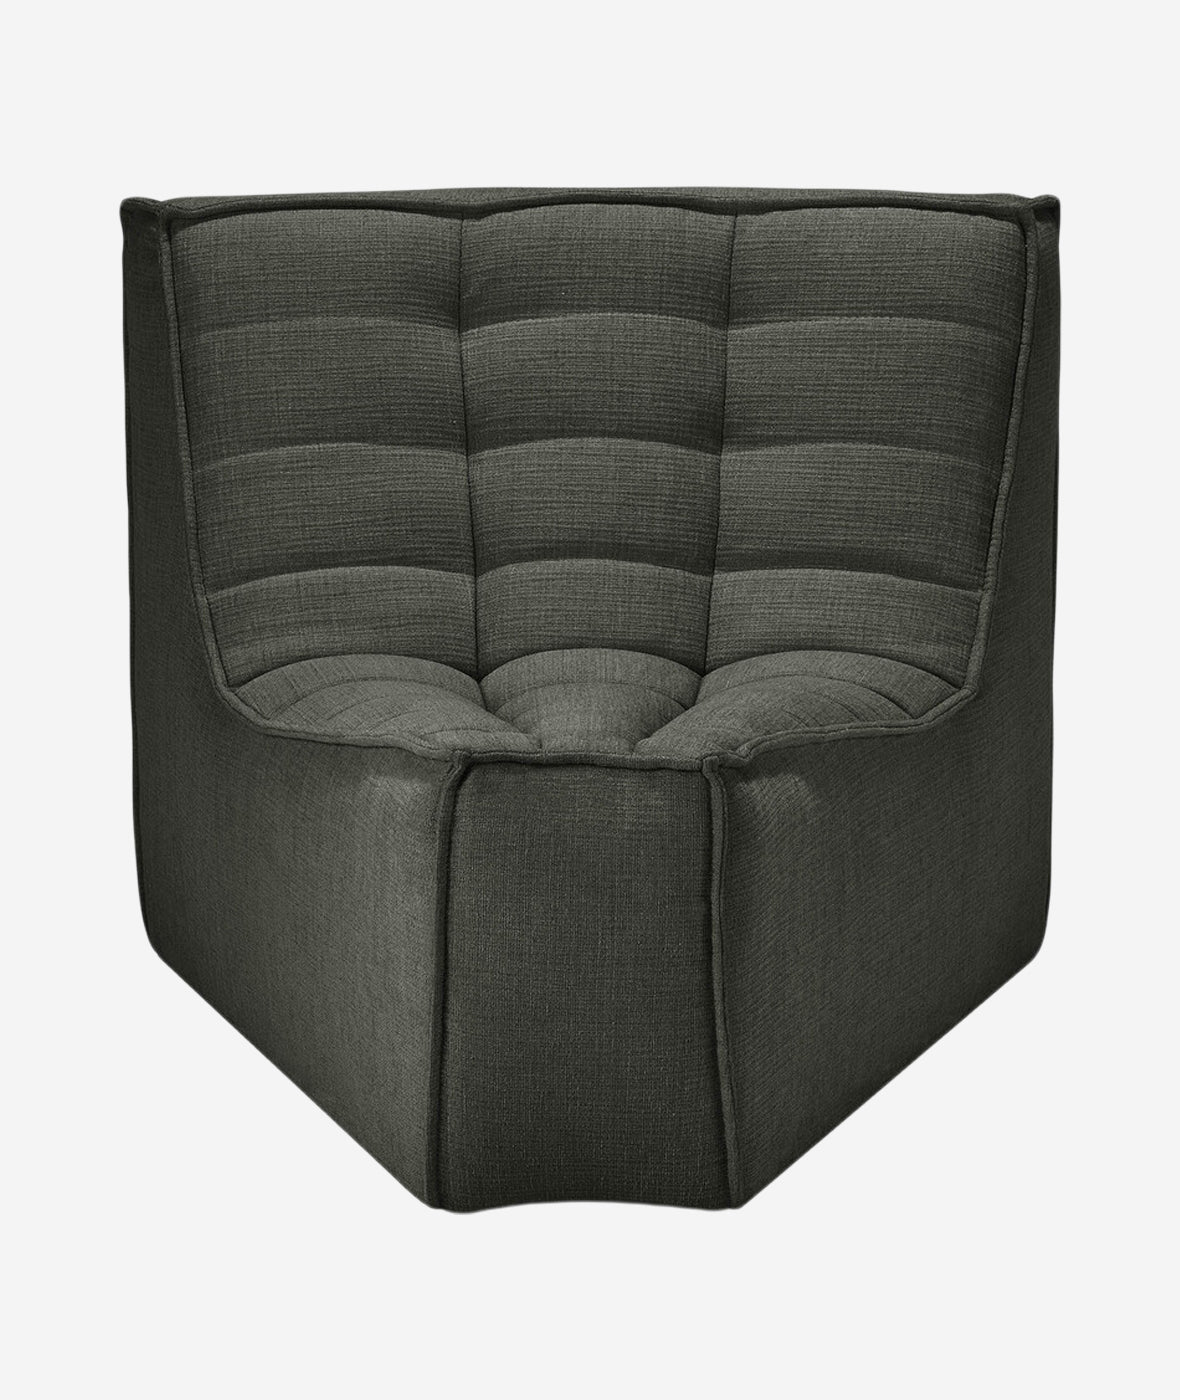 N701 Modular Round Corner Sofa - More Options